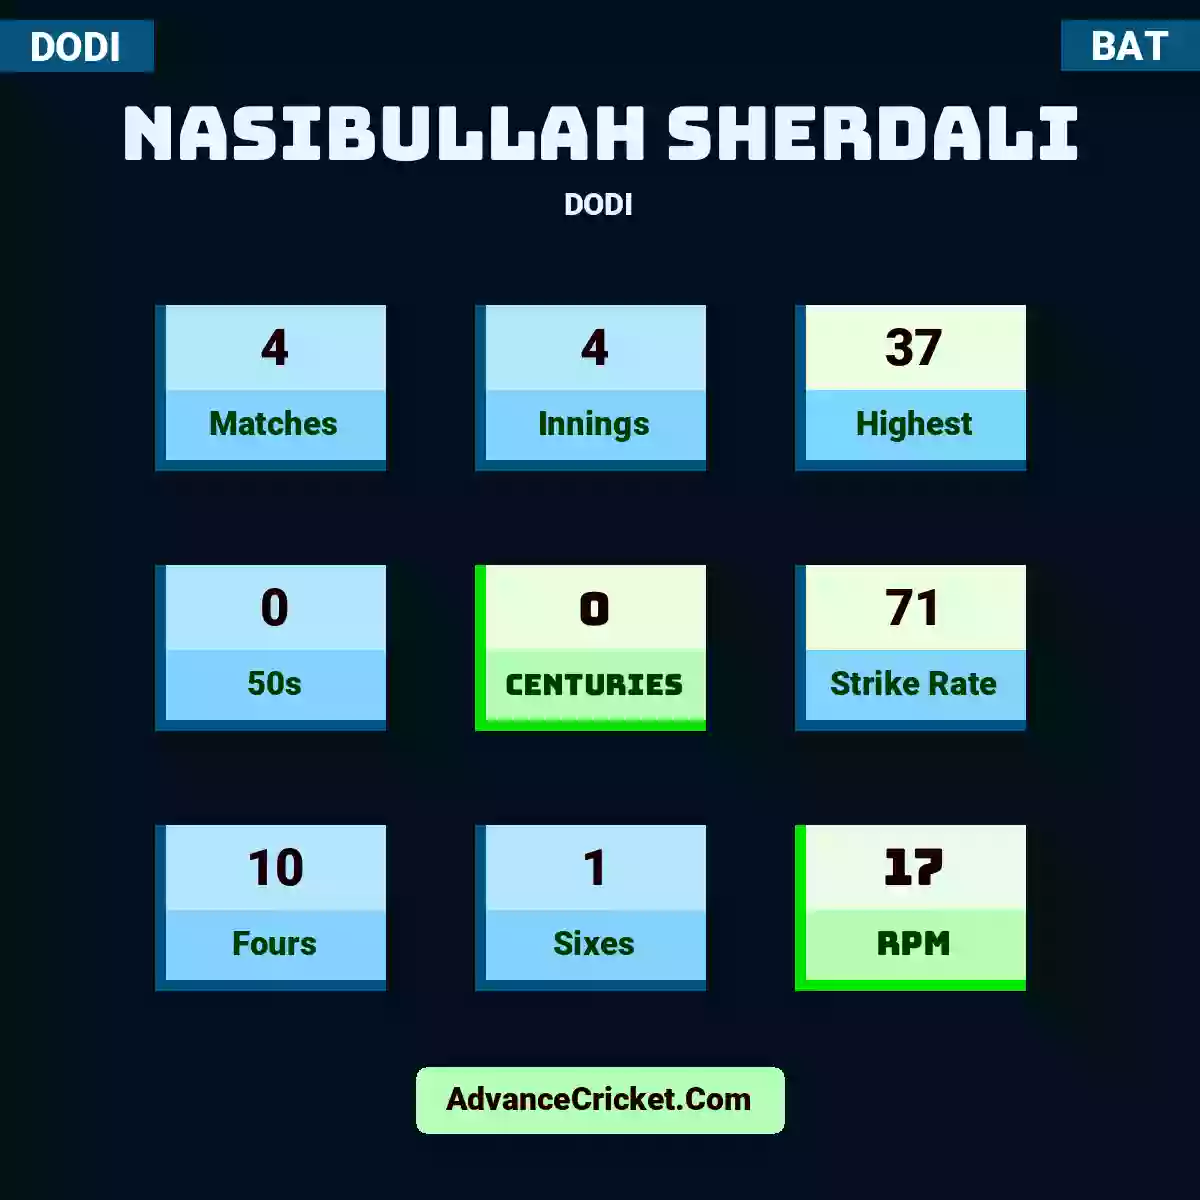 Nasibullah Sherdali DODI , Nasibullah Sherdali played 4 matches, scored 37 runs as highest, 0 half-centuries, and 0 centuries, with a strike rate of 71. N.Sherdali hit 10 fours and 1 sixes, with an RPM of 17.